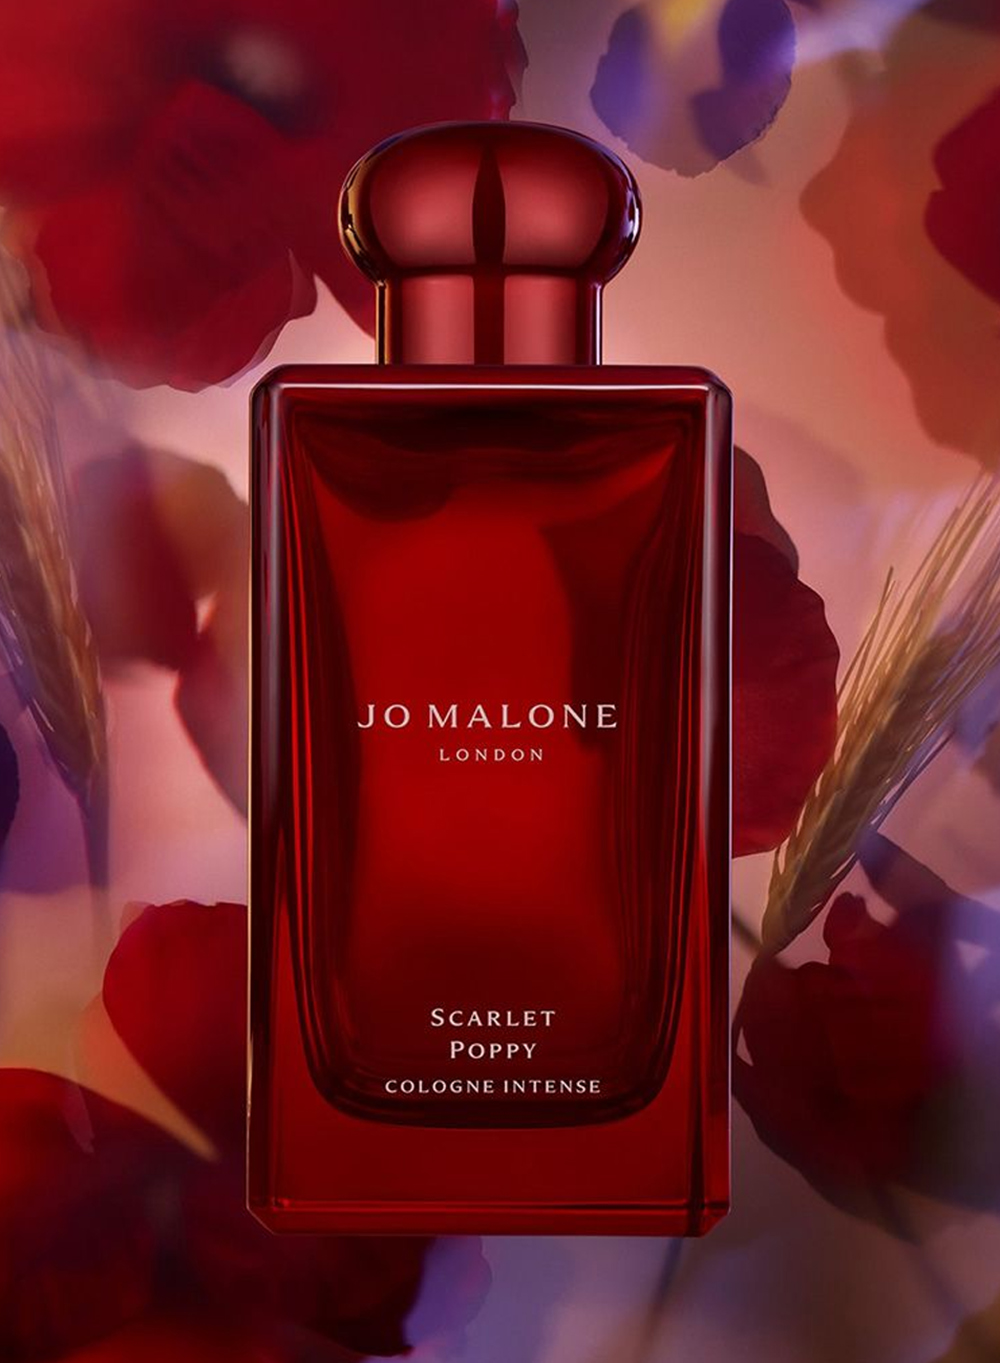 Jo Malone London 发布异国情调香水- Scarlet Poppy Cologne Intense 